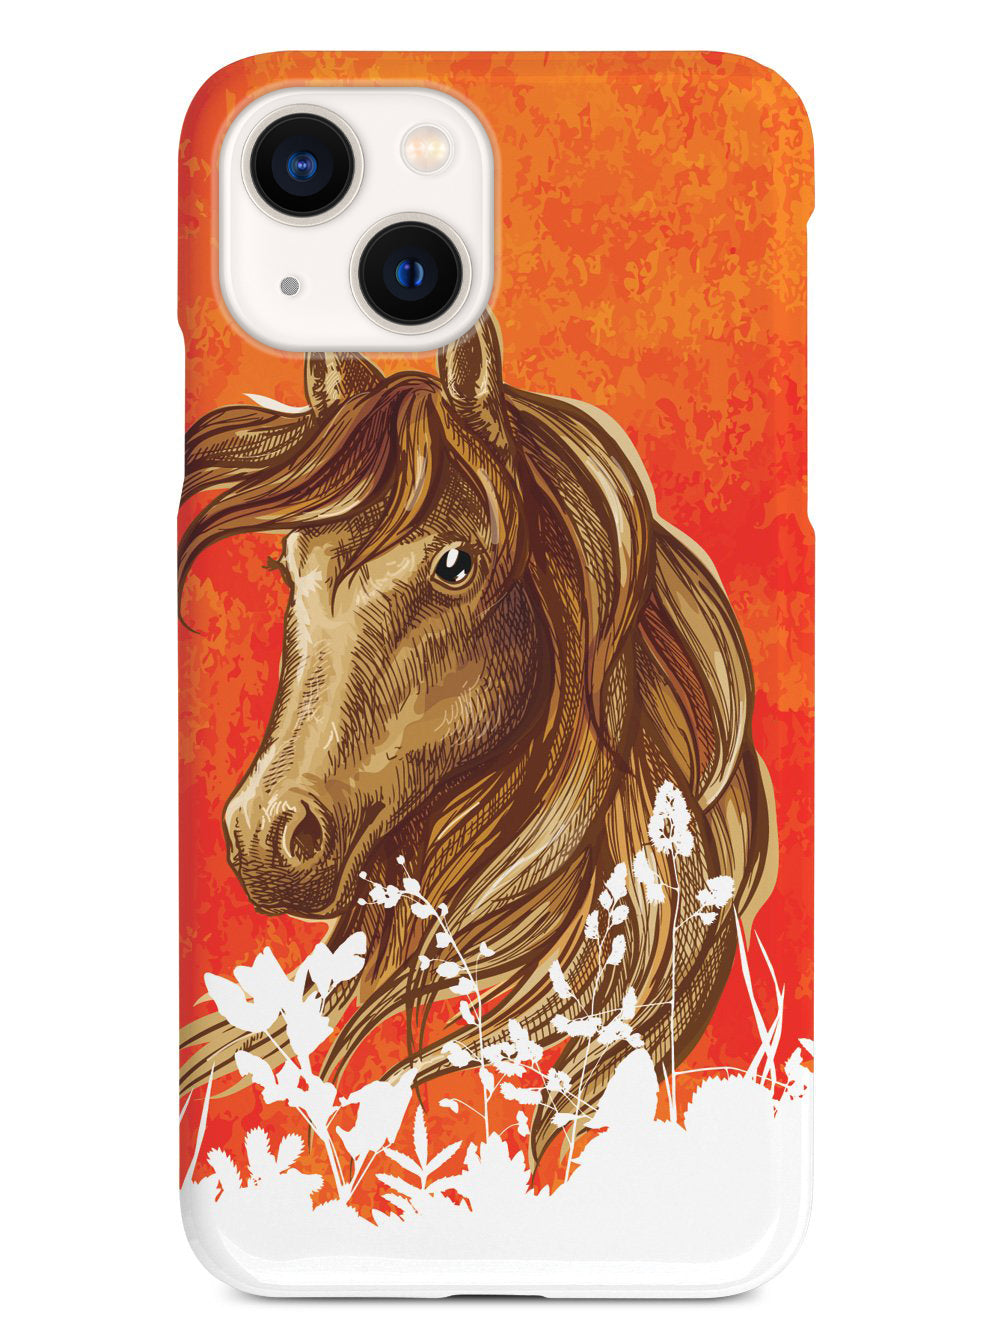 Watercolor Horse Illustration - Sunset Orange & Red Case